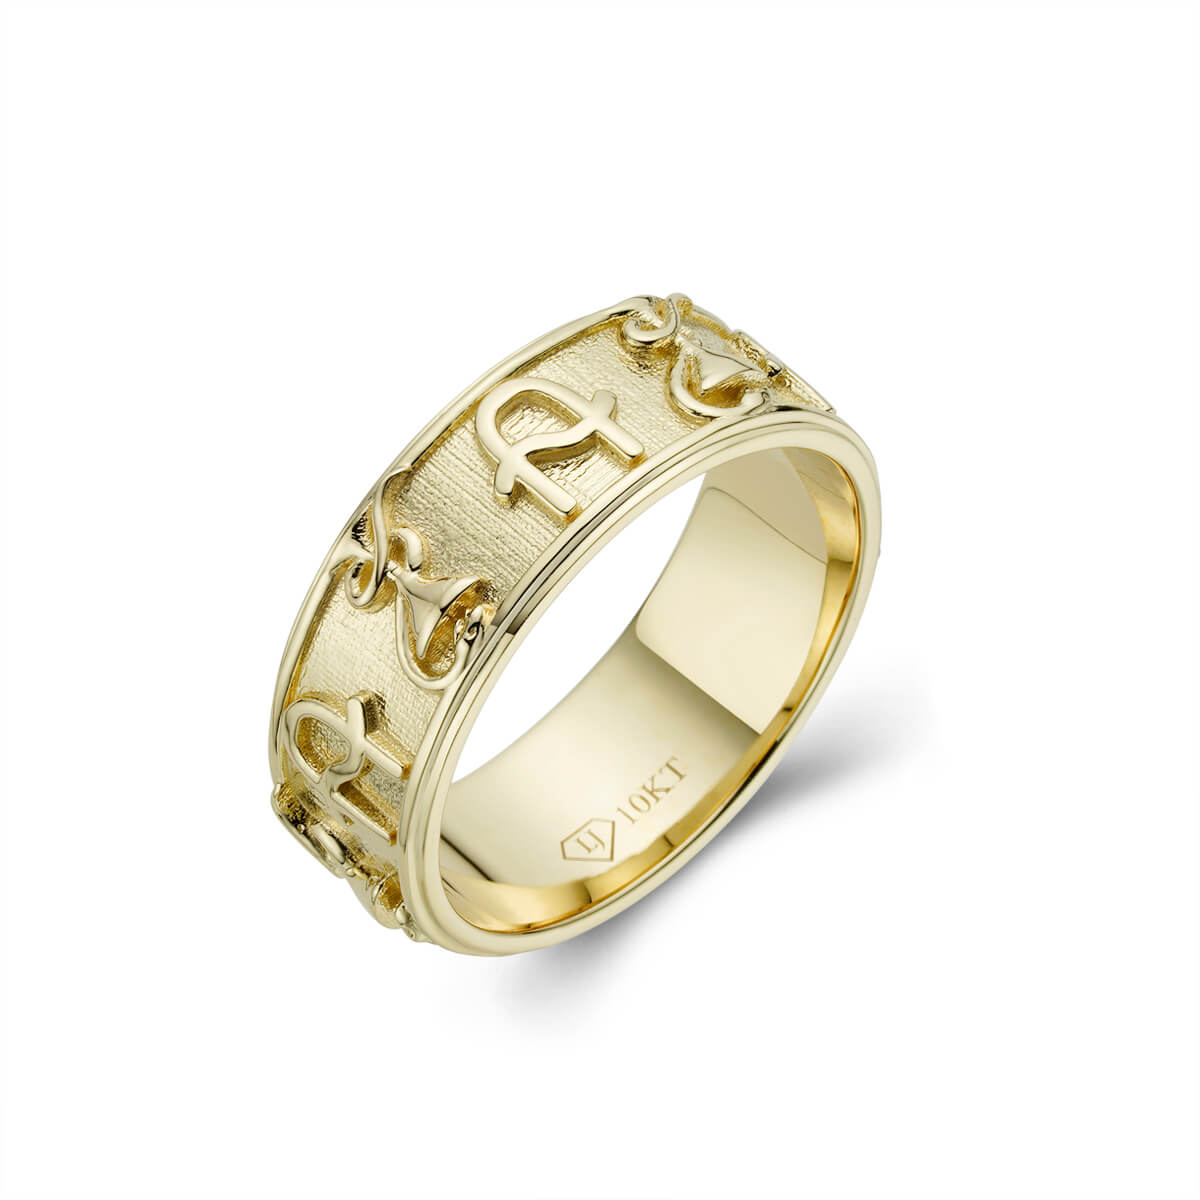 Zodiac Sign Signet Ring - Libra - Symbol | Jewelry – Whitney Howard Designs